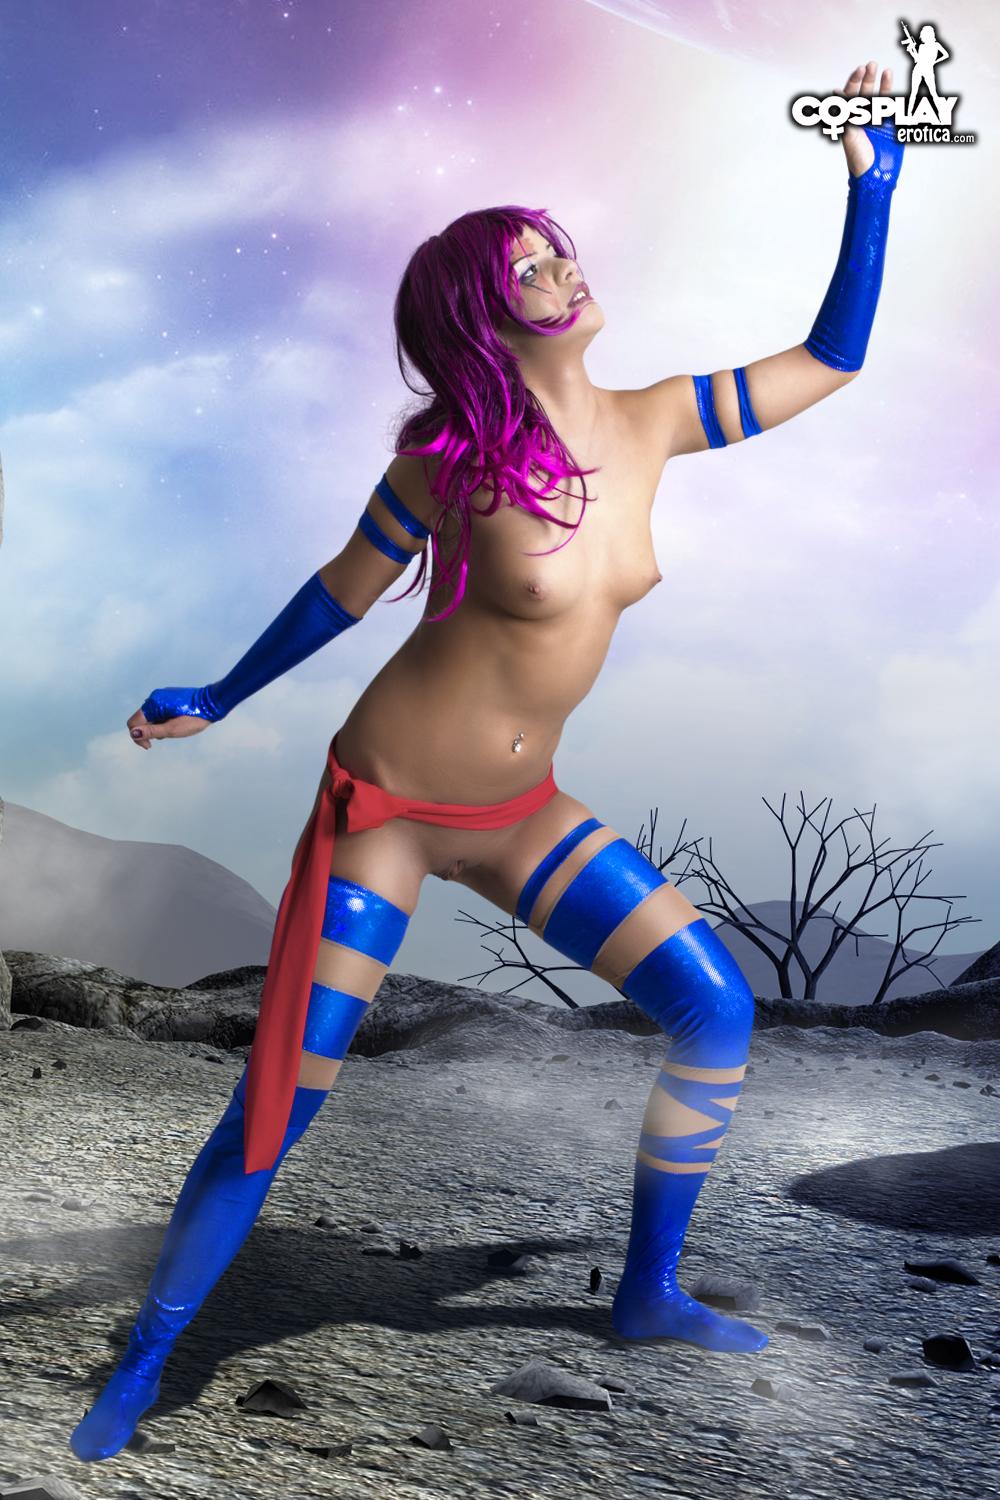 La cosplayer erótica ginger se viste de psylocke de x-men
 #54531419